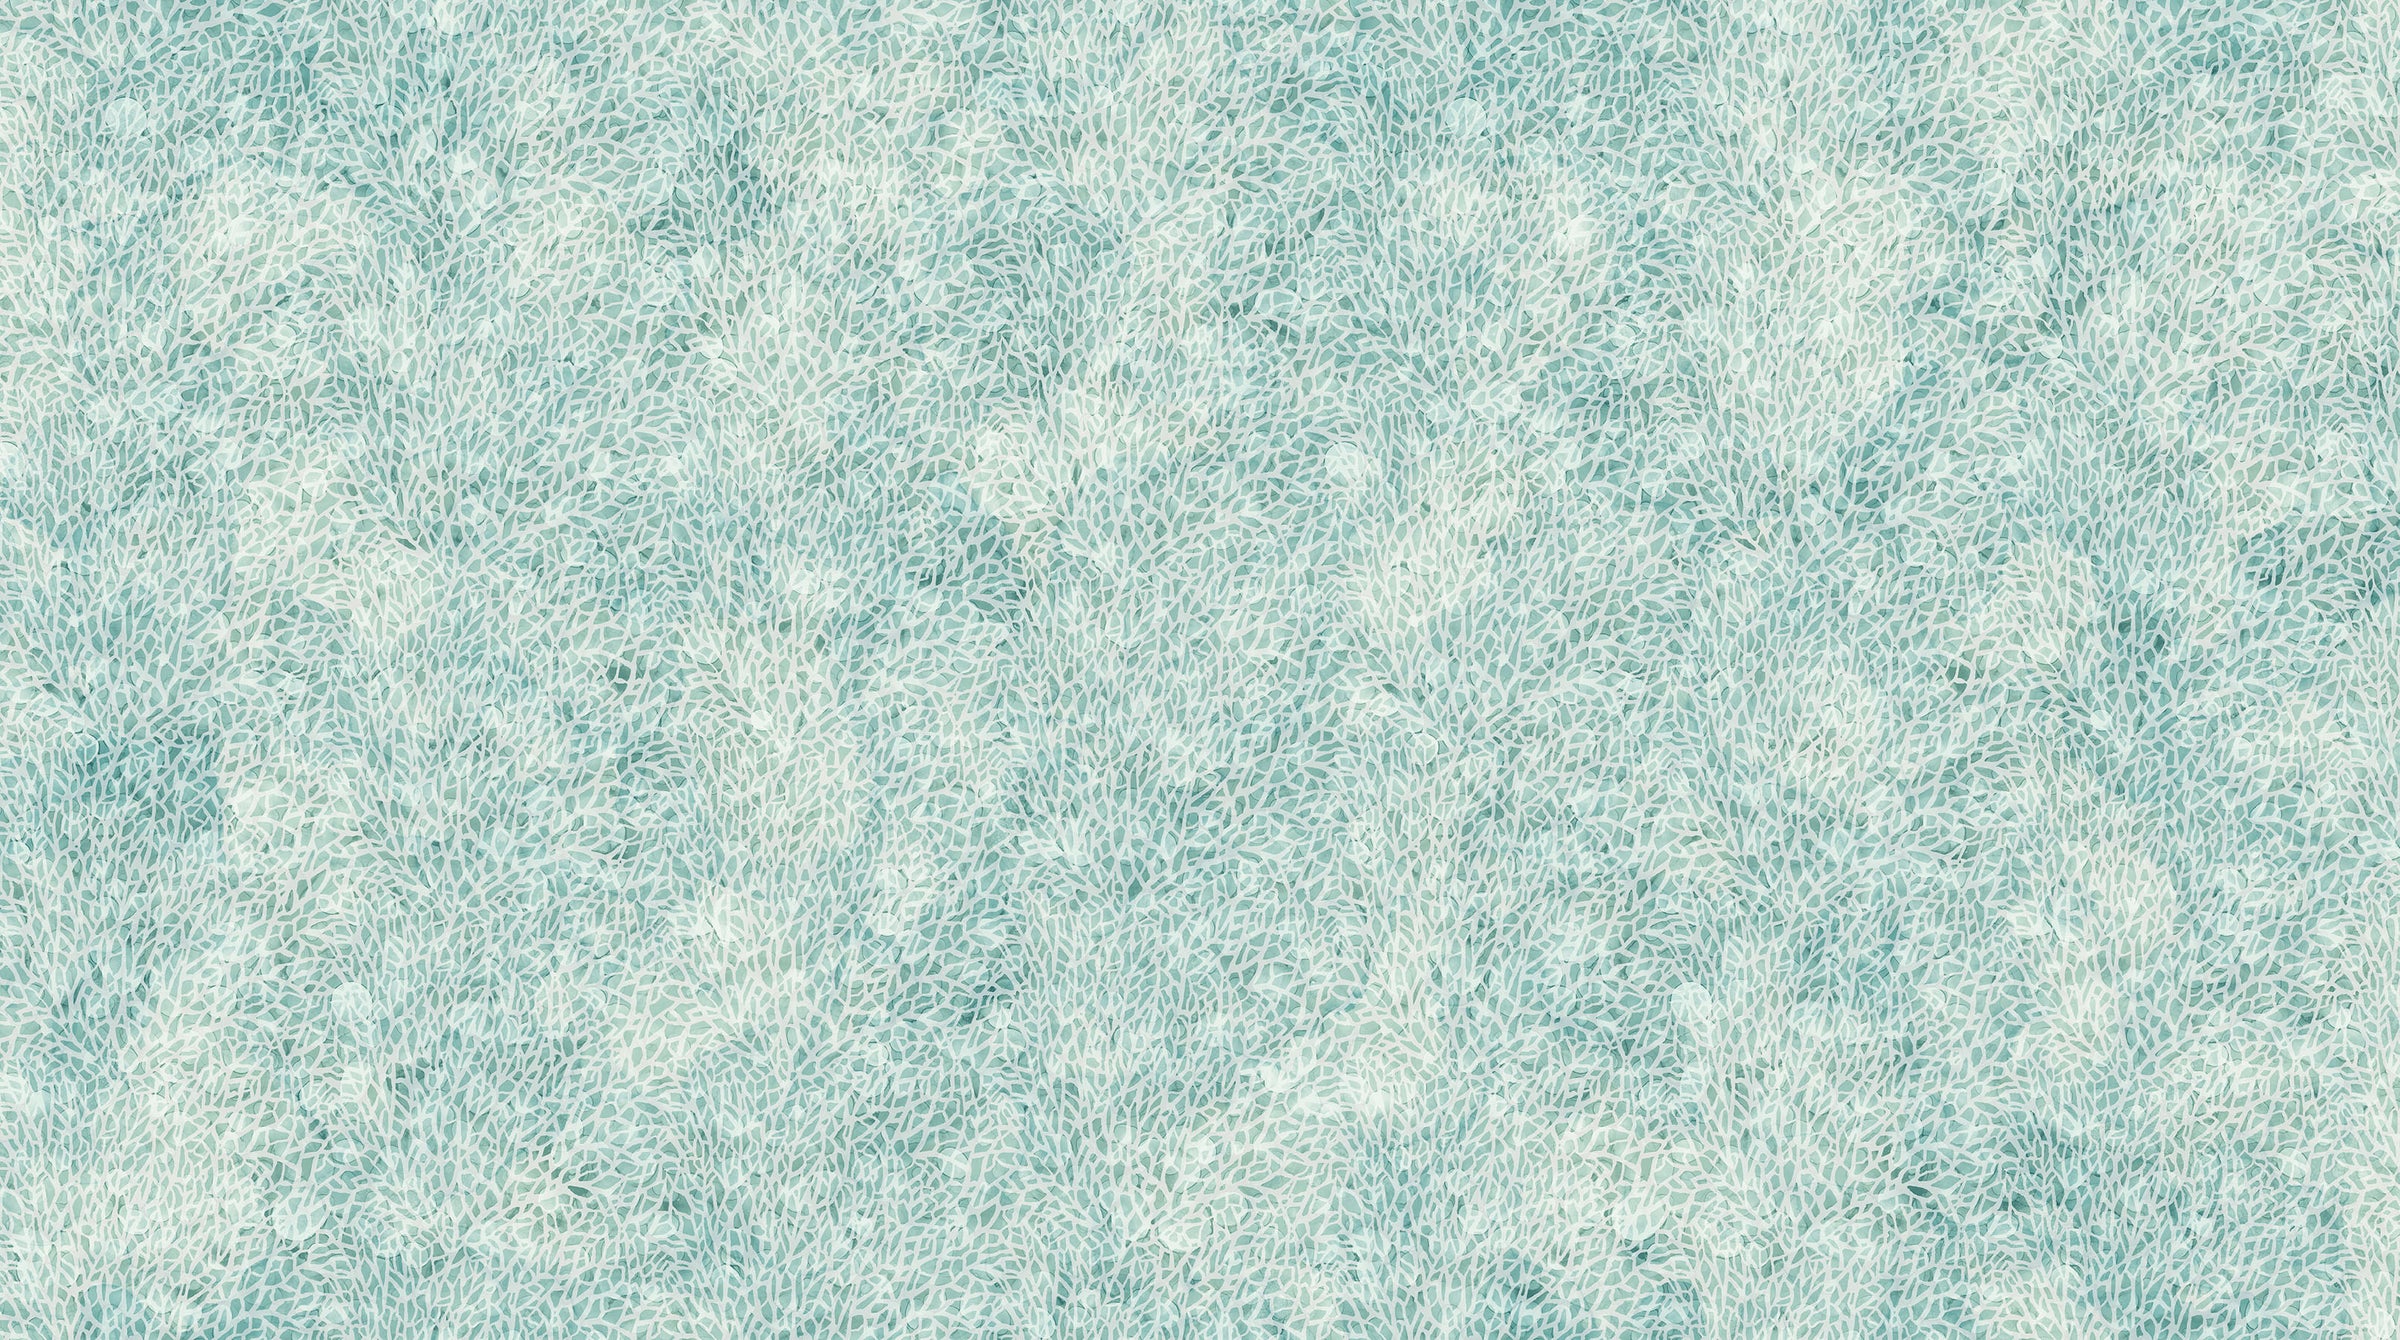 Sea Breeze Quilt Fabric - Coral Blender in Seafoam - DP27103-62